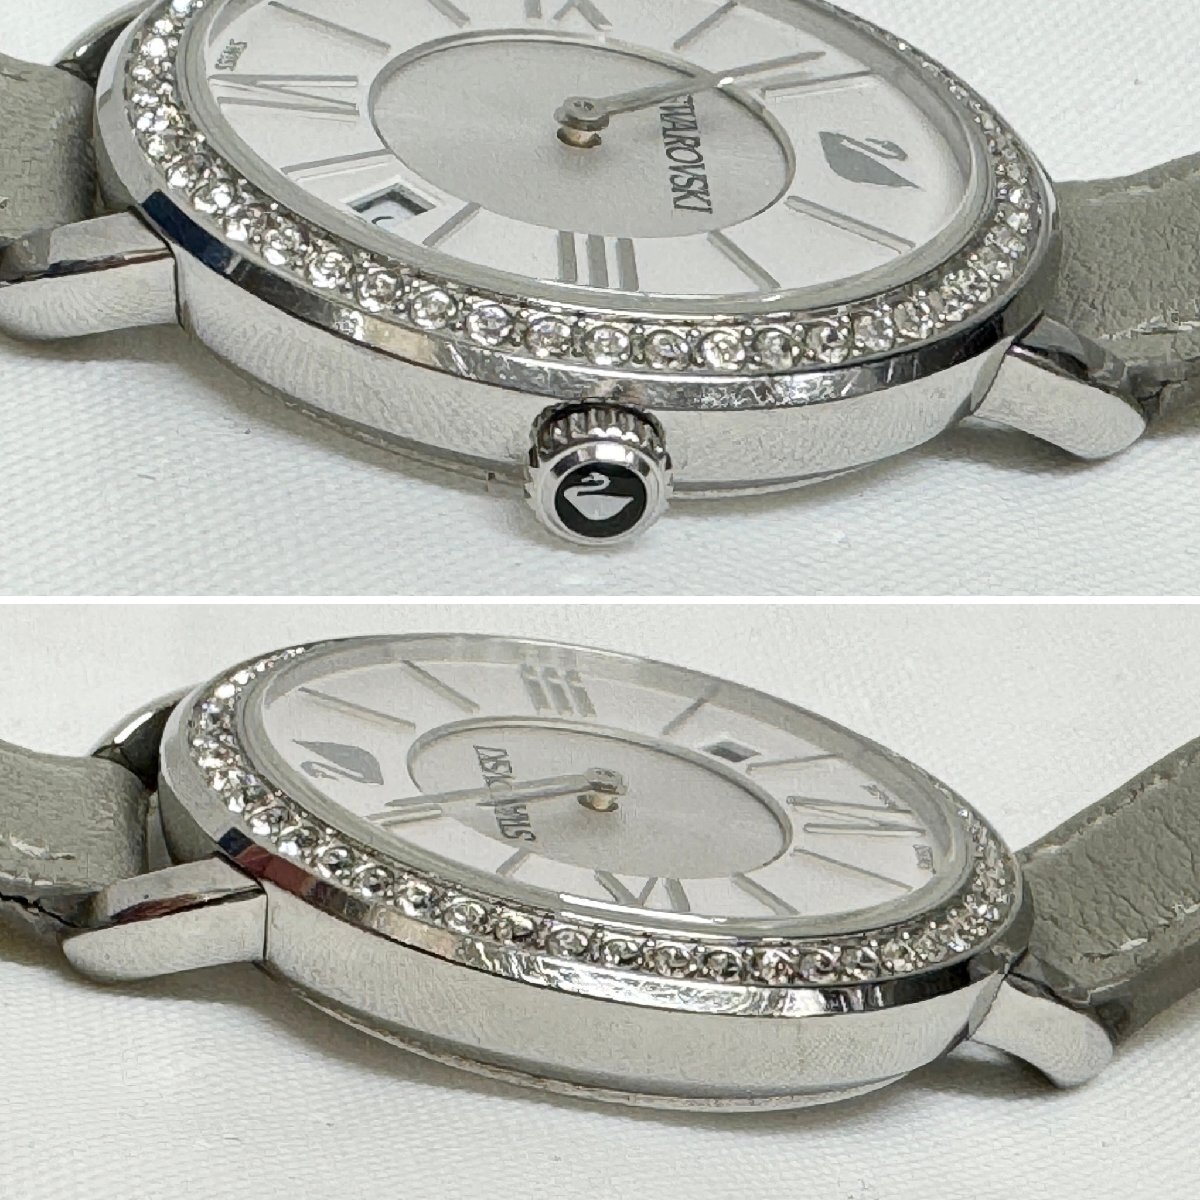  gold gram [27]Swarovski Swarovski Islay teiSTS 5182191 quartz wristwatch * present condition immovable * certificate * box * Junk *1 jpy ~[ free shipping ]